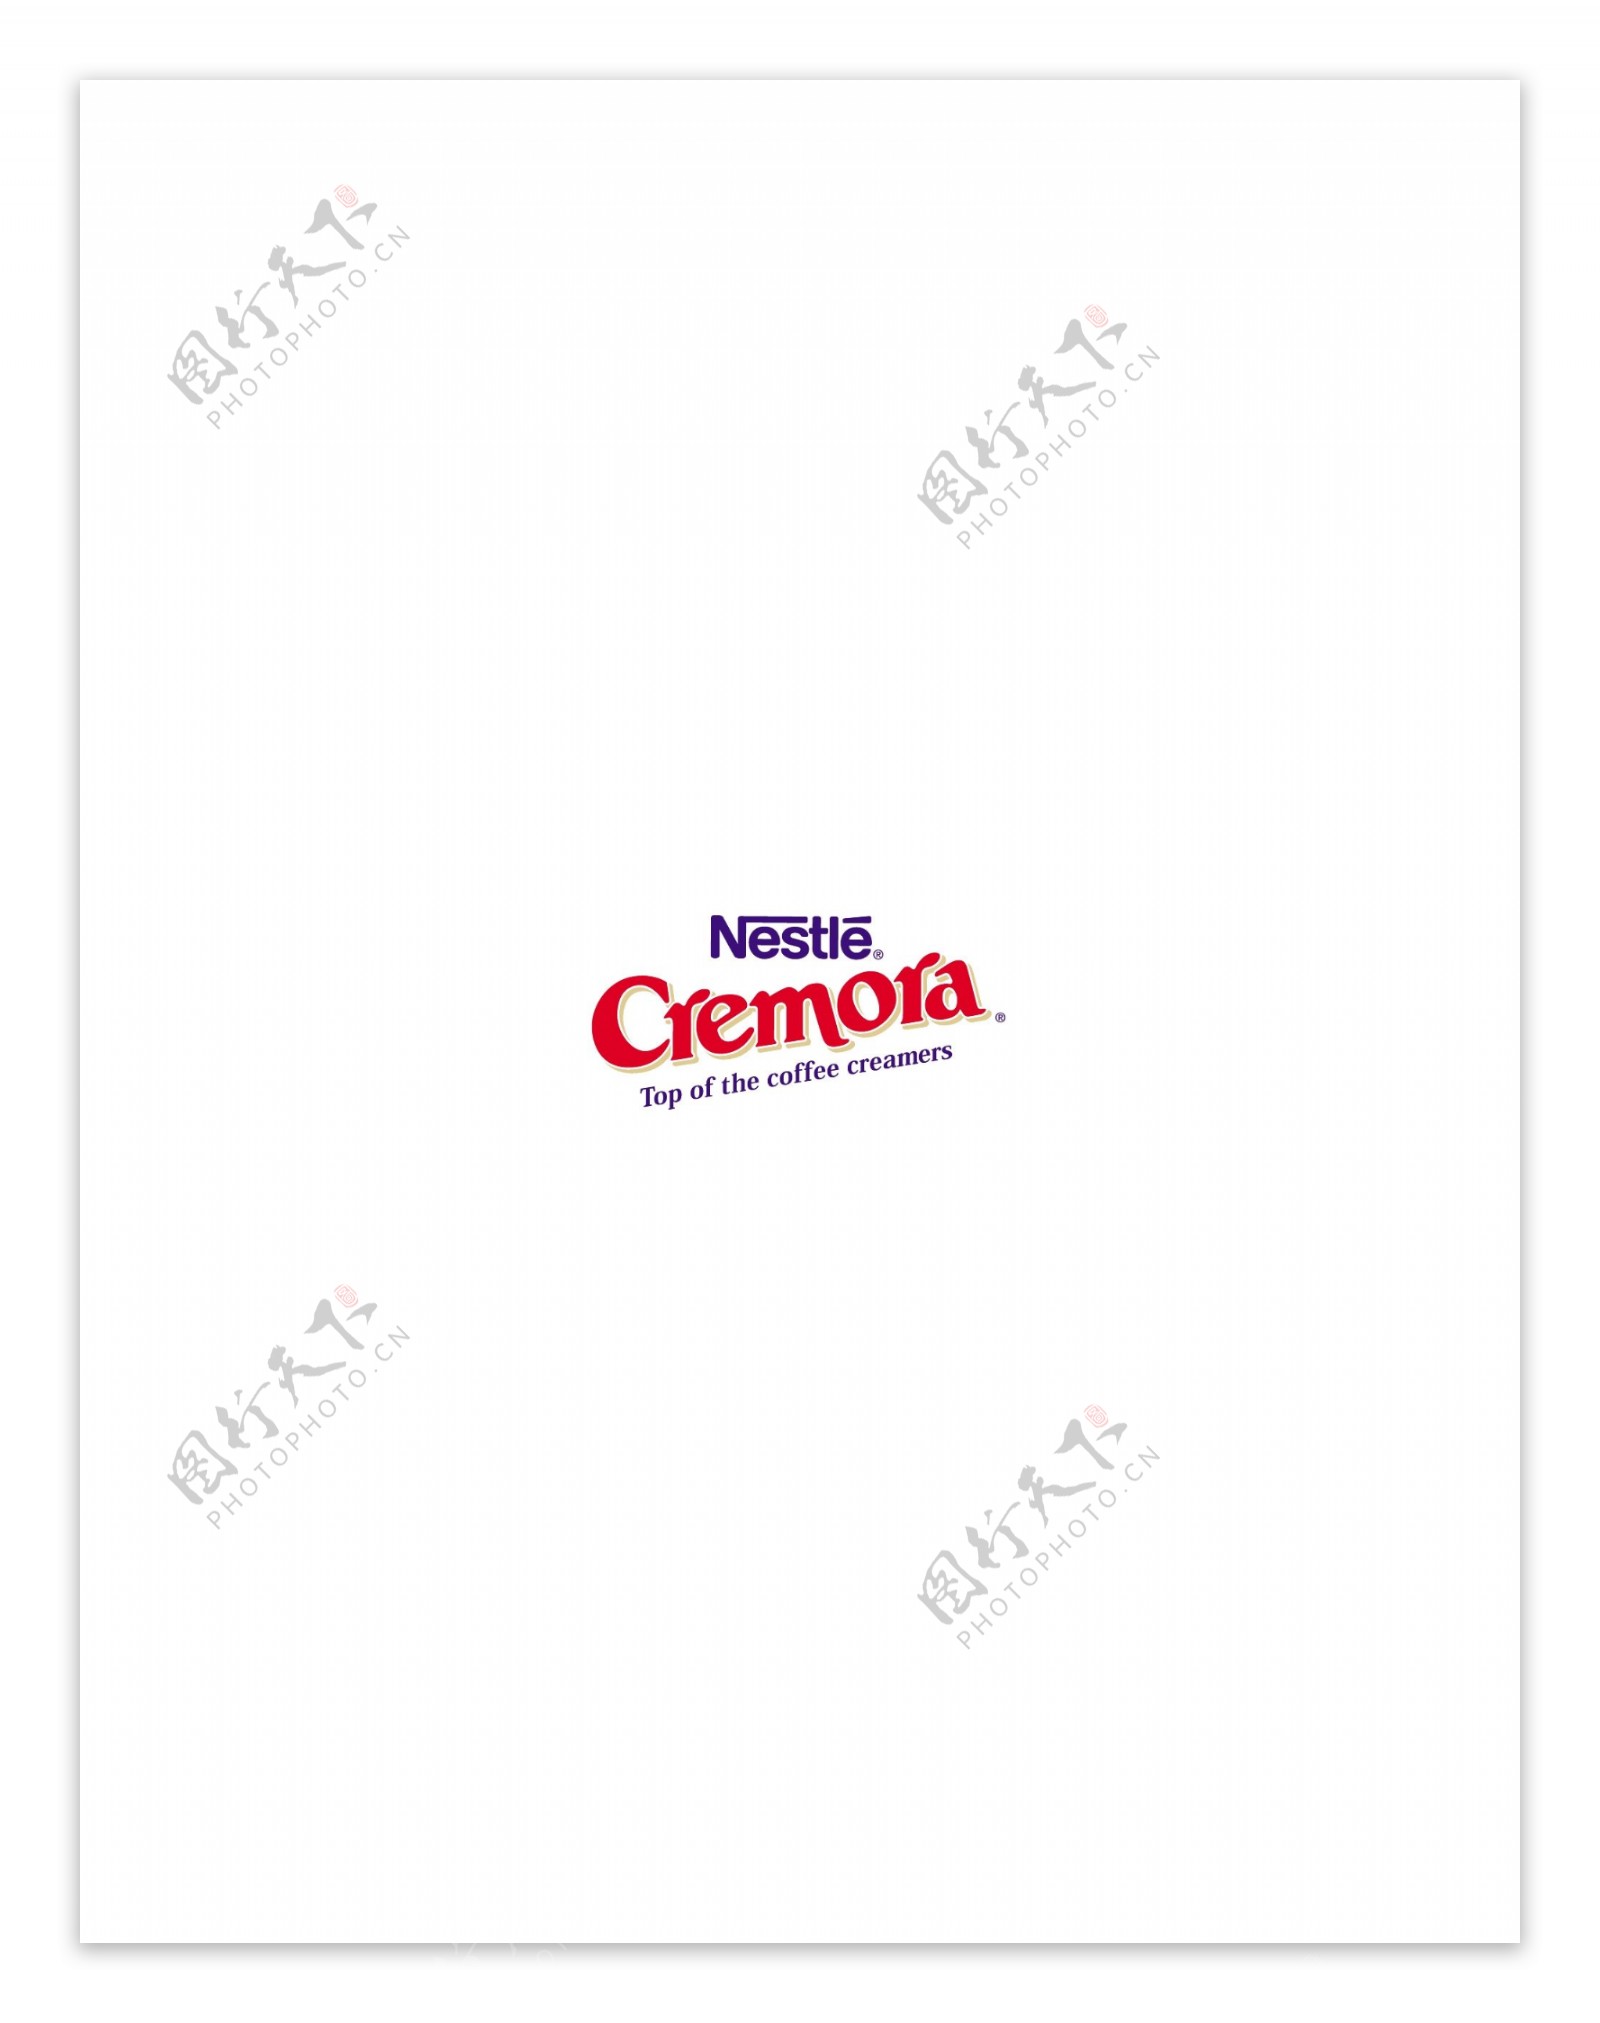 NestleCremoralogo设计欣赏NestleCremora饮料品牌标志下载标志设计欣赏